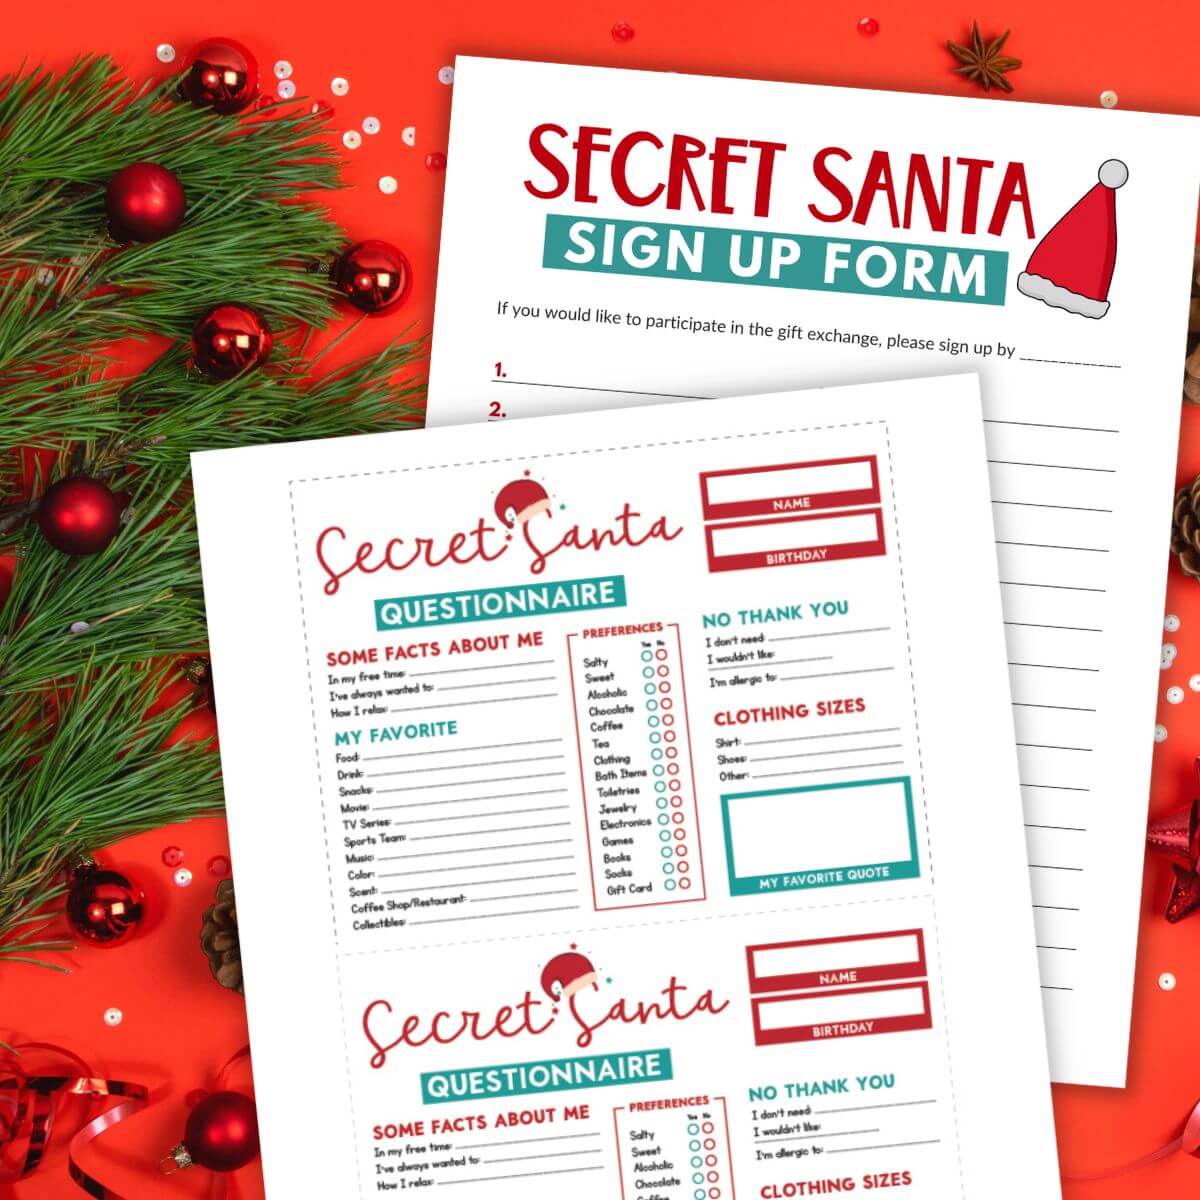 Fun and Festive Secret Santa Guidelines